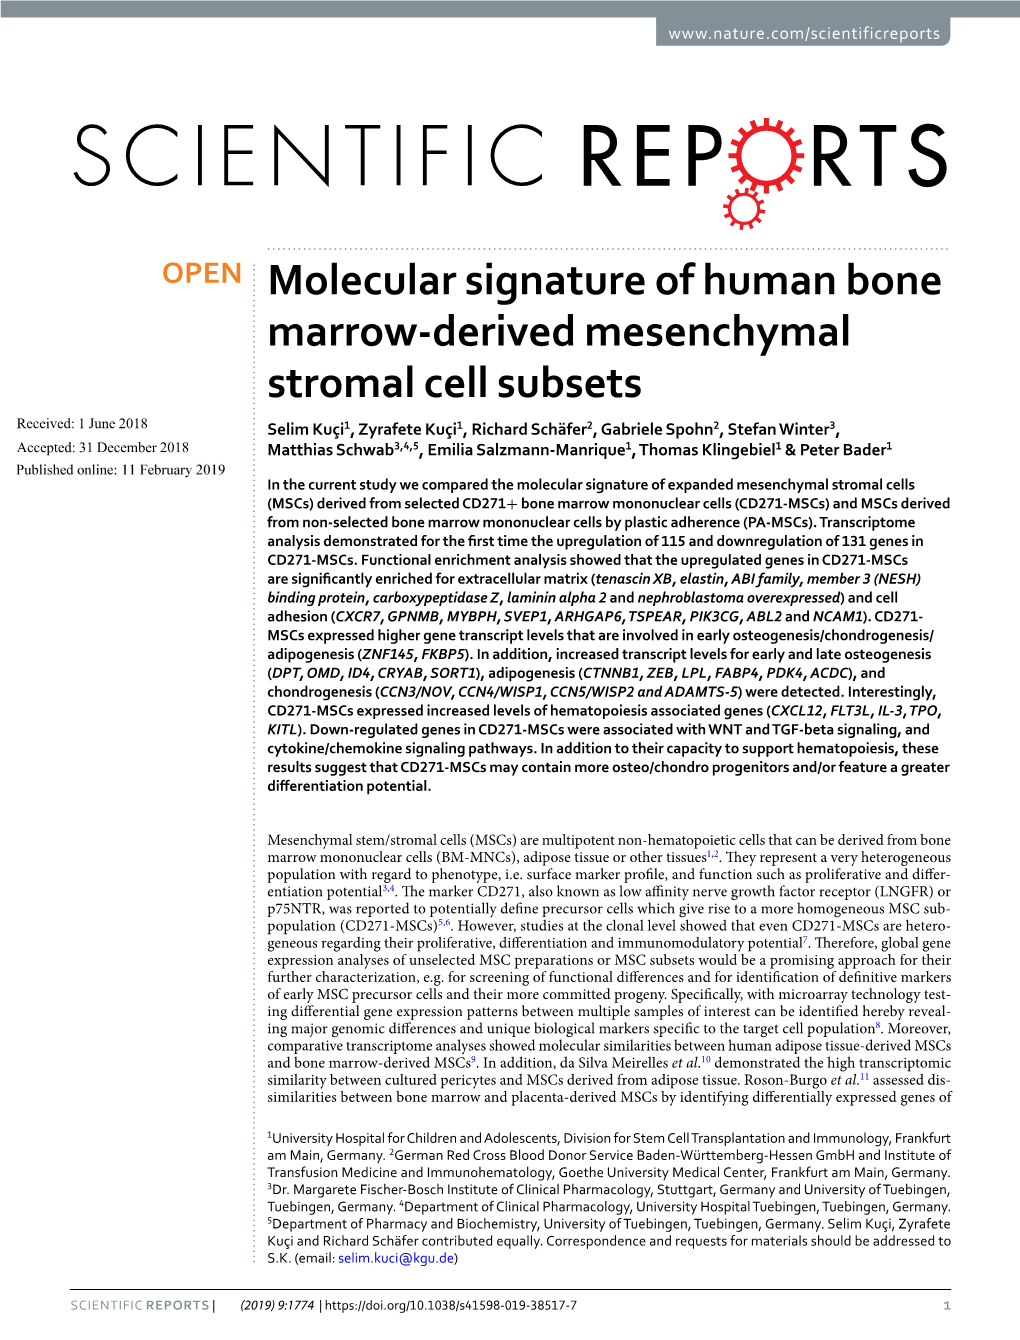 Molecular Signature of Human Bone Marrow-Derived Mesenchymal